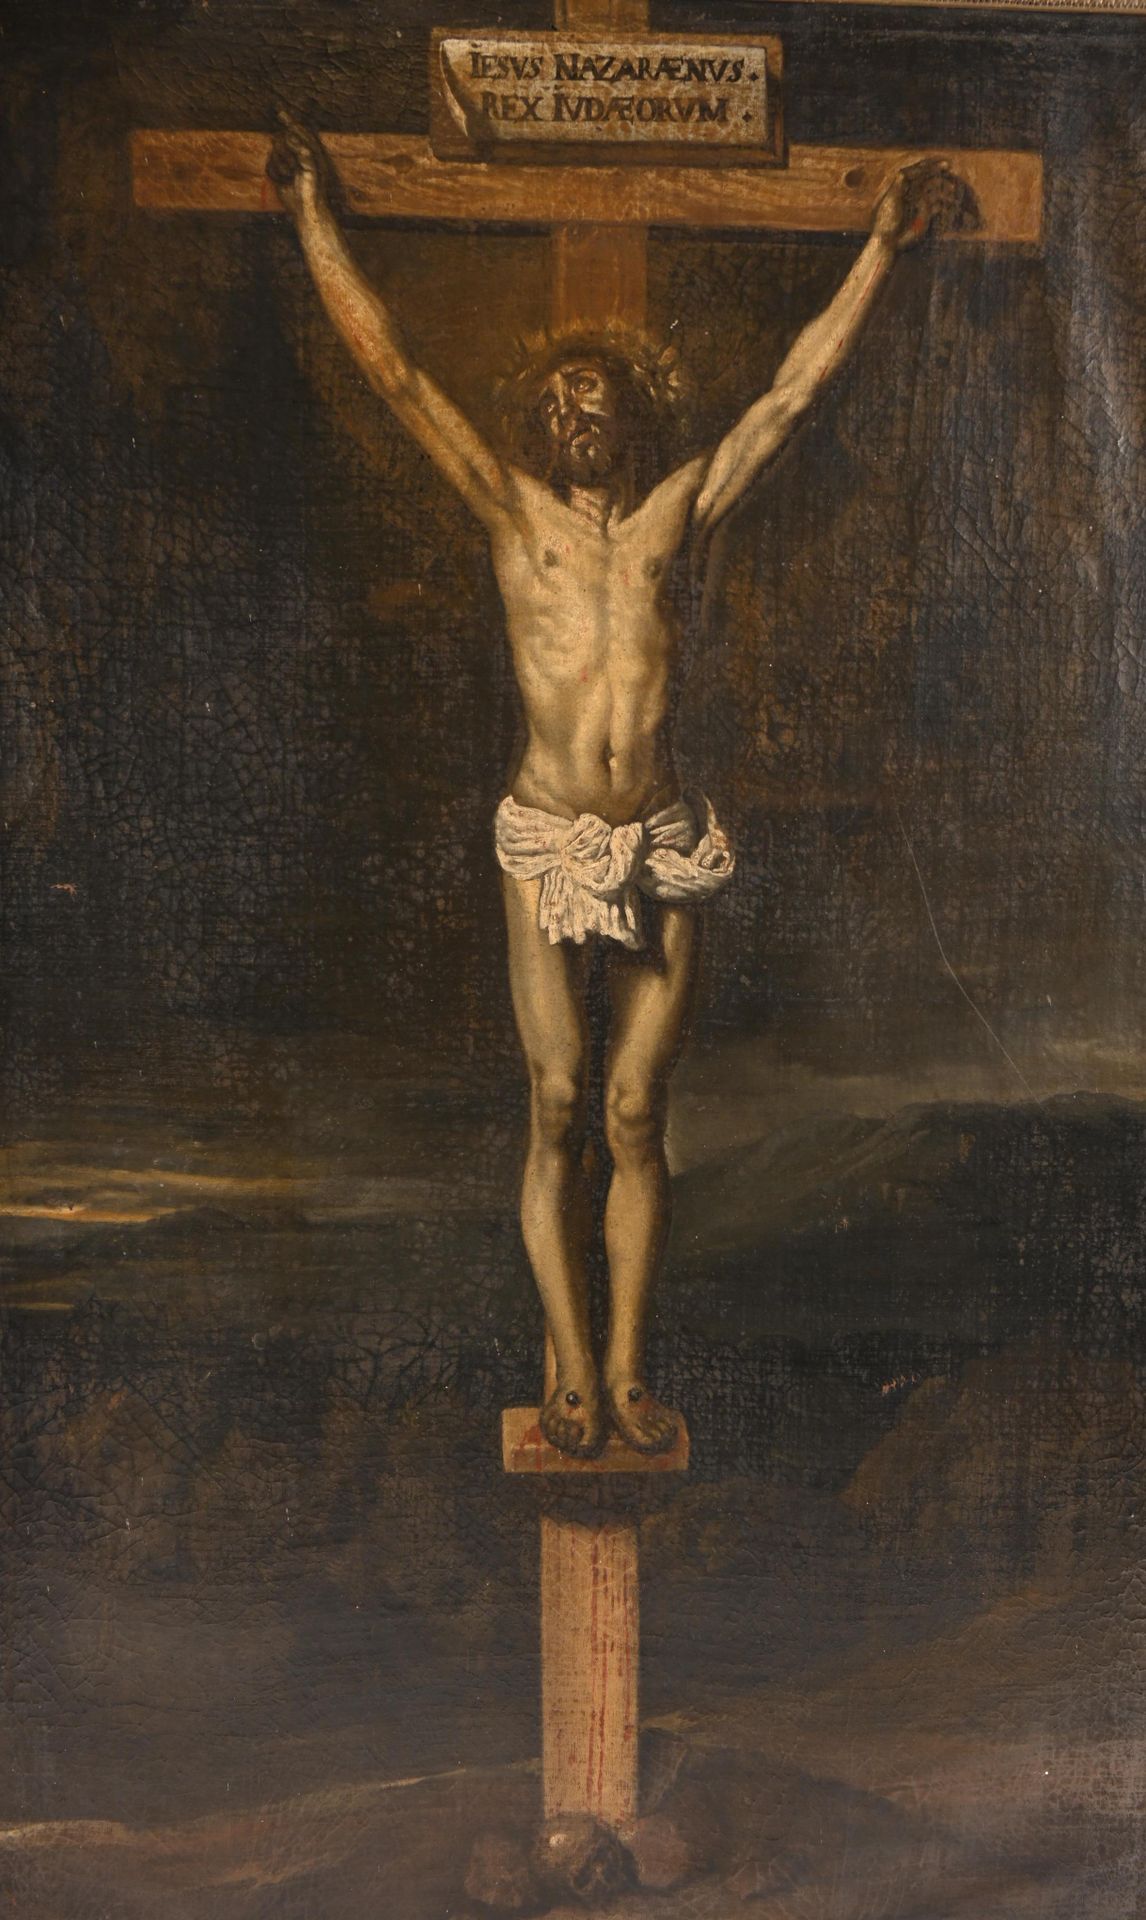 " Jésus de Nazareth Roi des Juifs" 18世纪的荷兰画派。

"拿撒勒人耶稣，犹太人的国王"。

布面油画。

旧的修复工作。
&hellip;